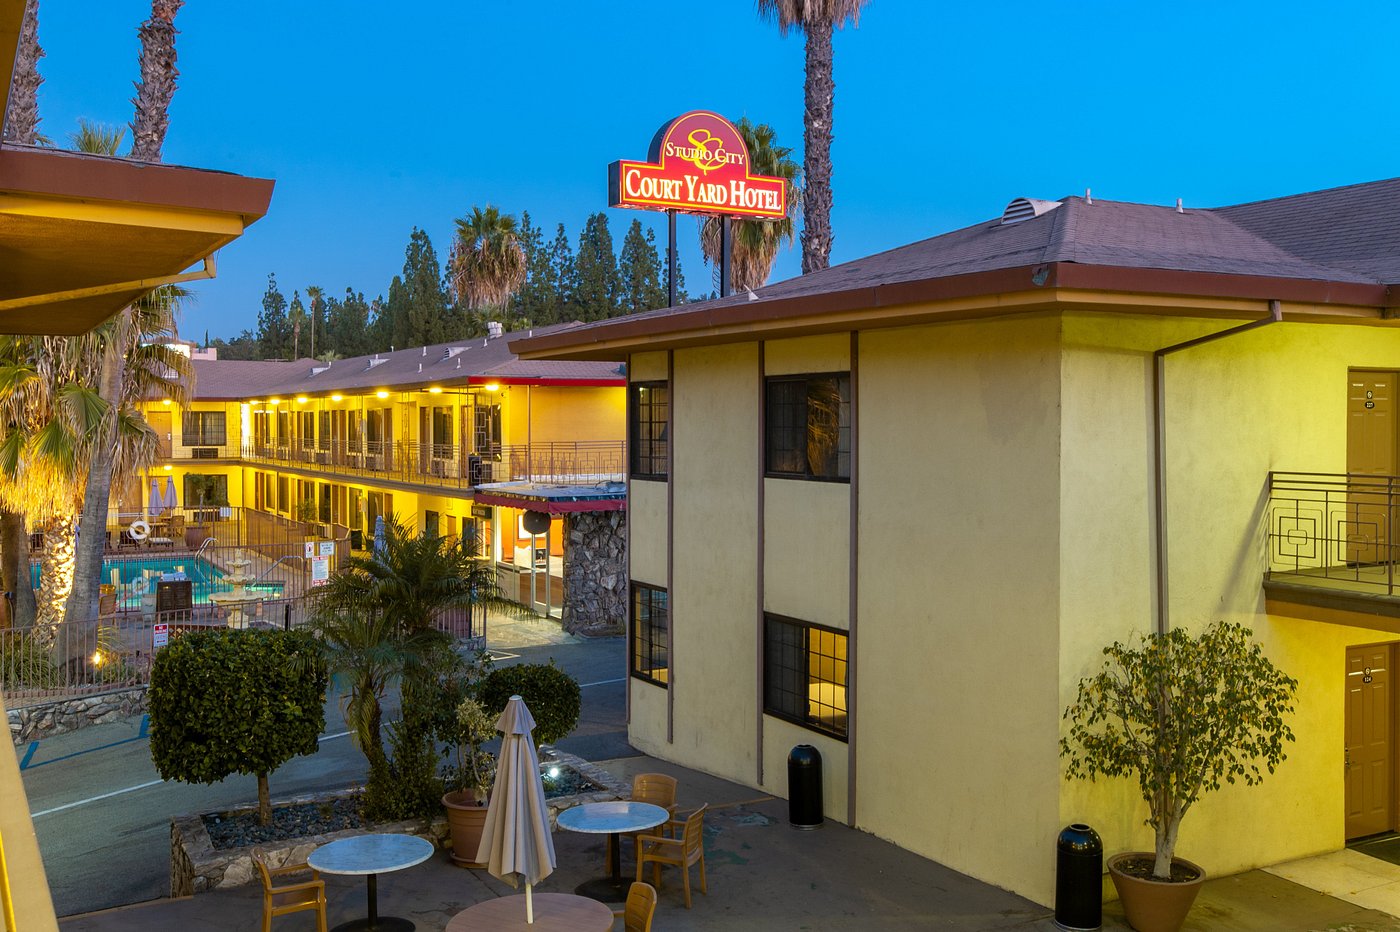 STUDIO CITY COURT YARD HOTEL $101 ($̶1̶1̶8̶) Prices Motel Reviews